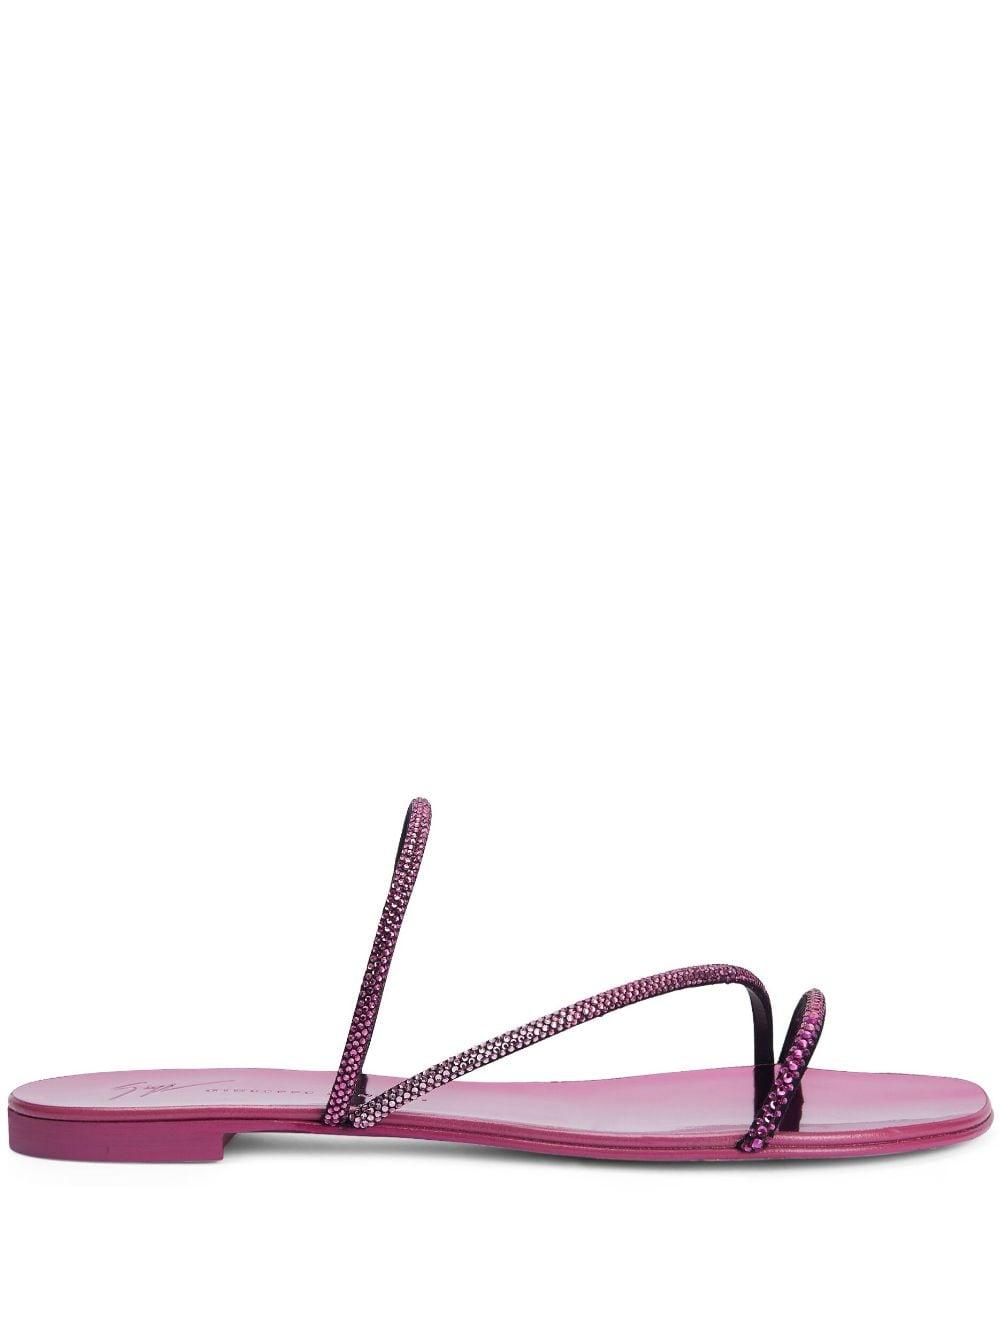 Giuseppe Zanotti Crystal-embellished Sandals in Pink Lyst UK